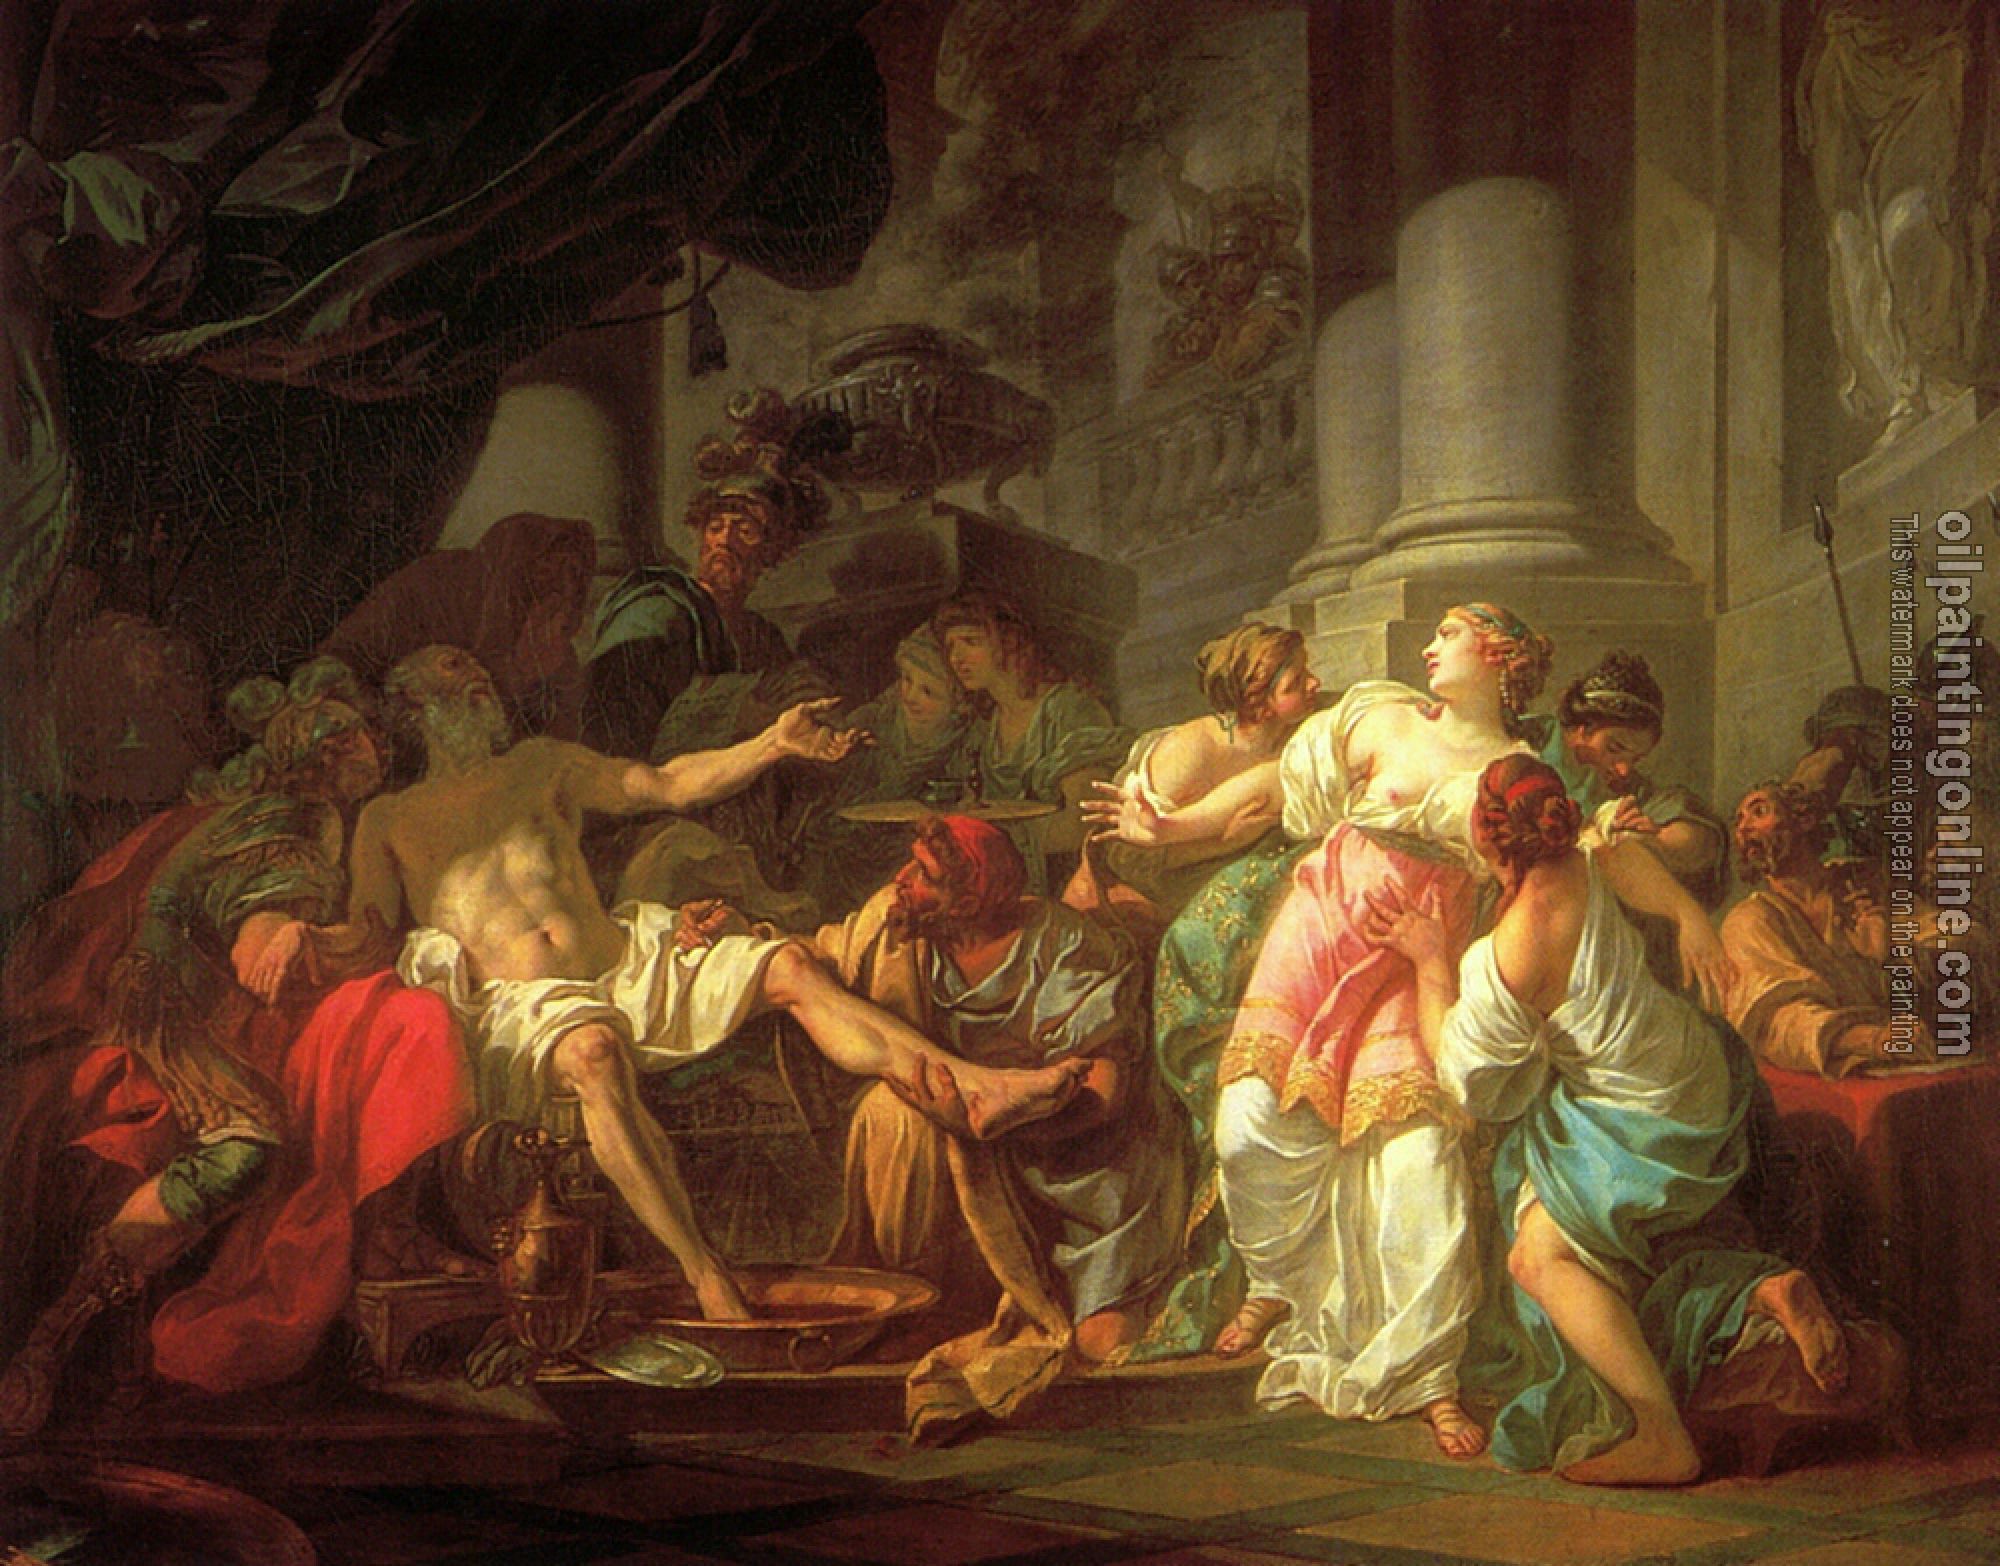 David, Jacques-Louis - The Death of Seneca